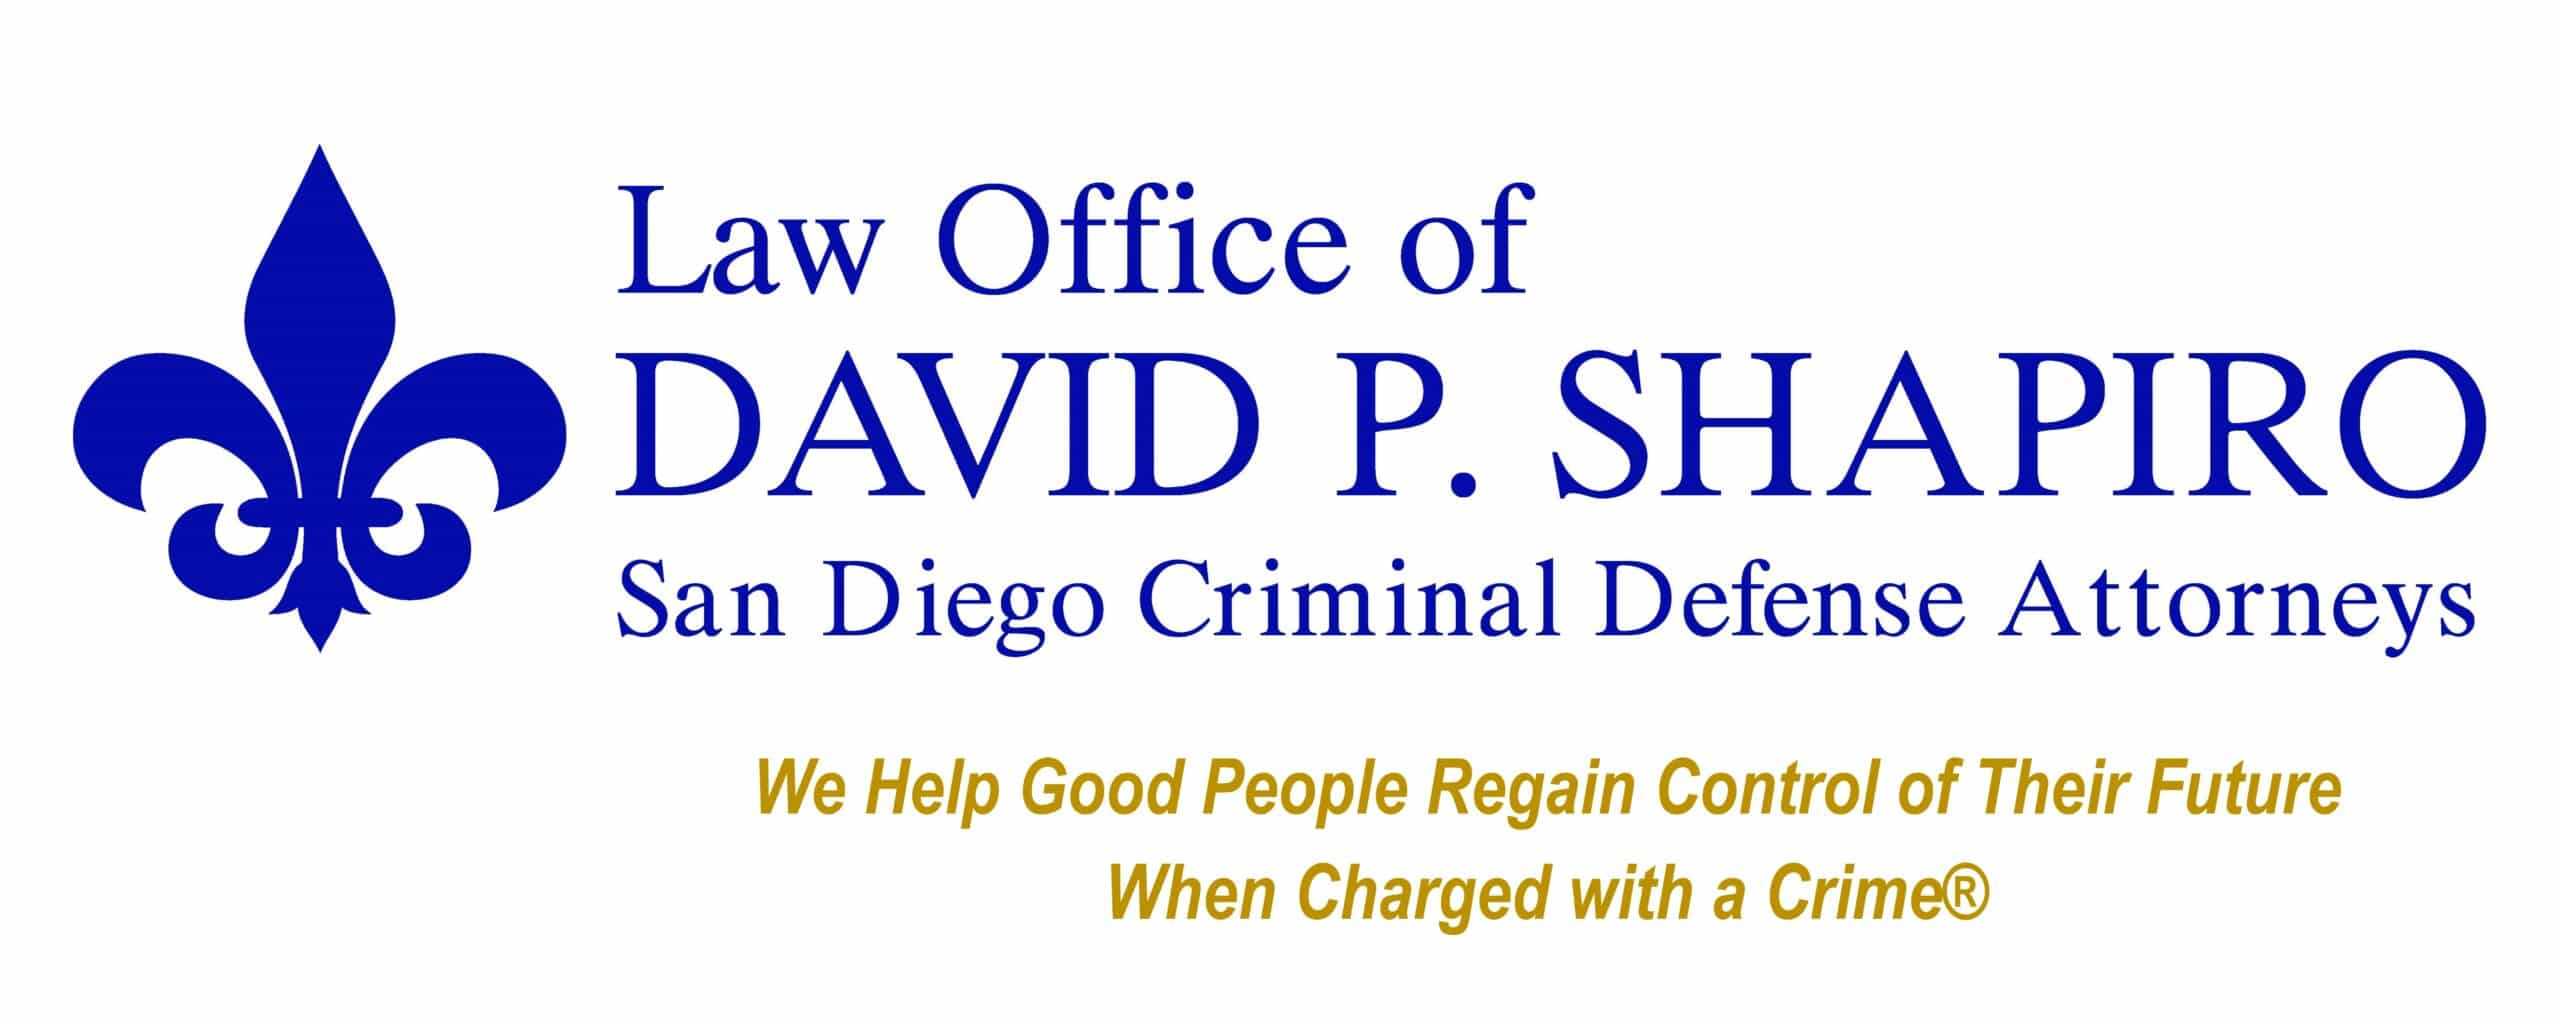 The law office of david sharpo san diego criminal defense attorneys.